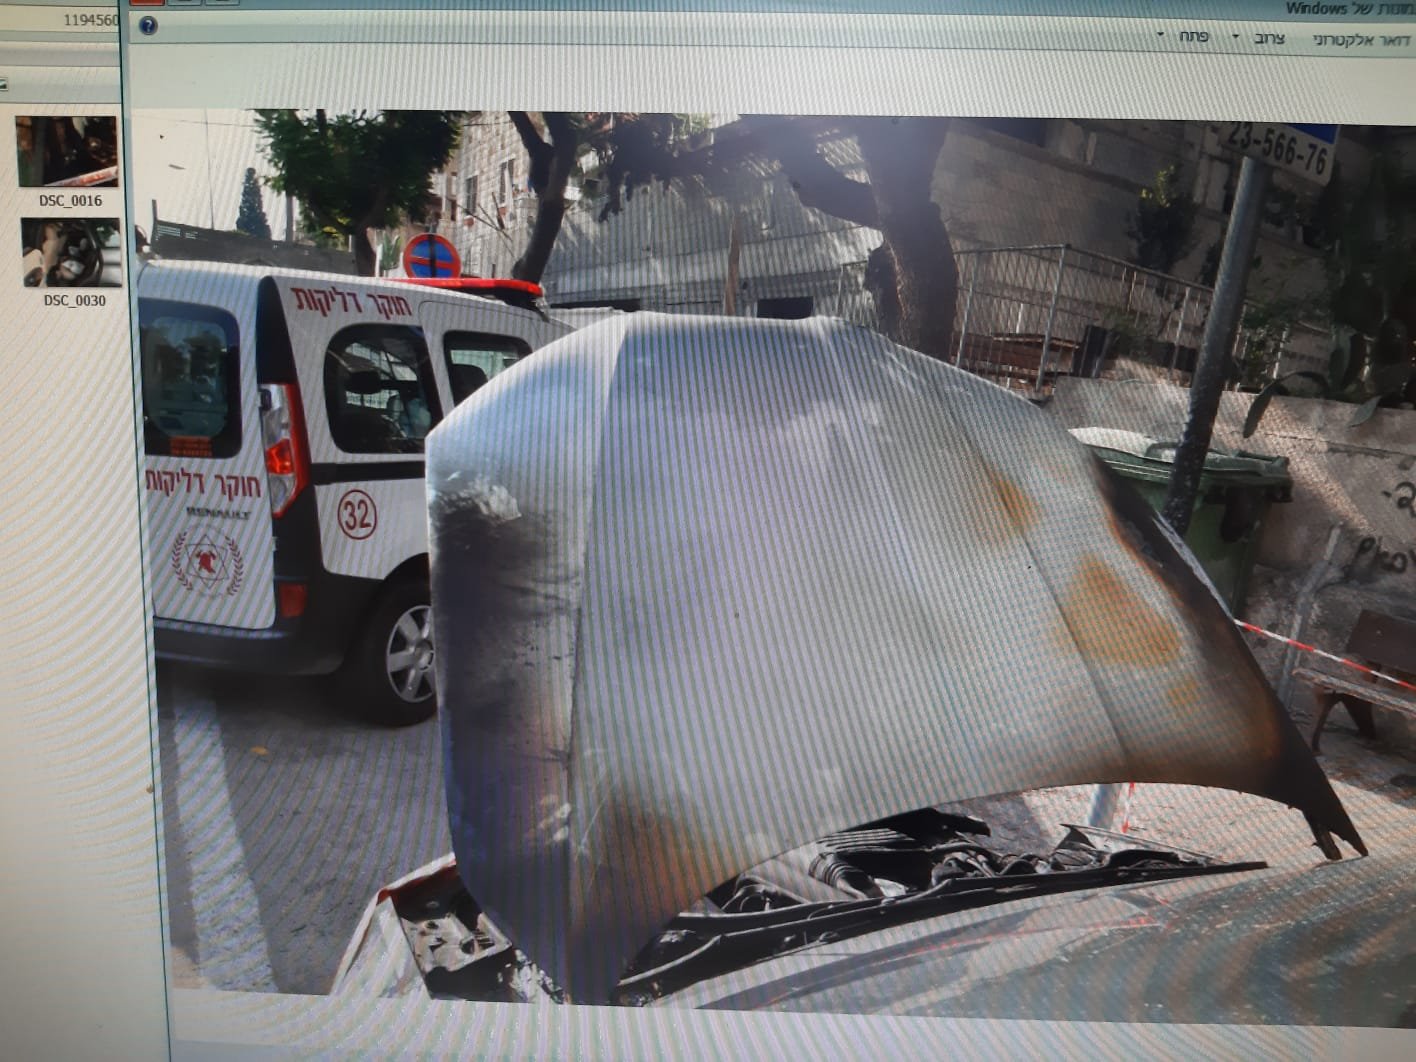 حيفا: اندلاع نيران بسيارات والشبهات تشير إلى اضرام نار متعمد-1